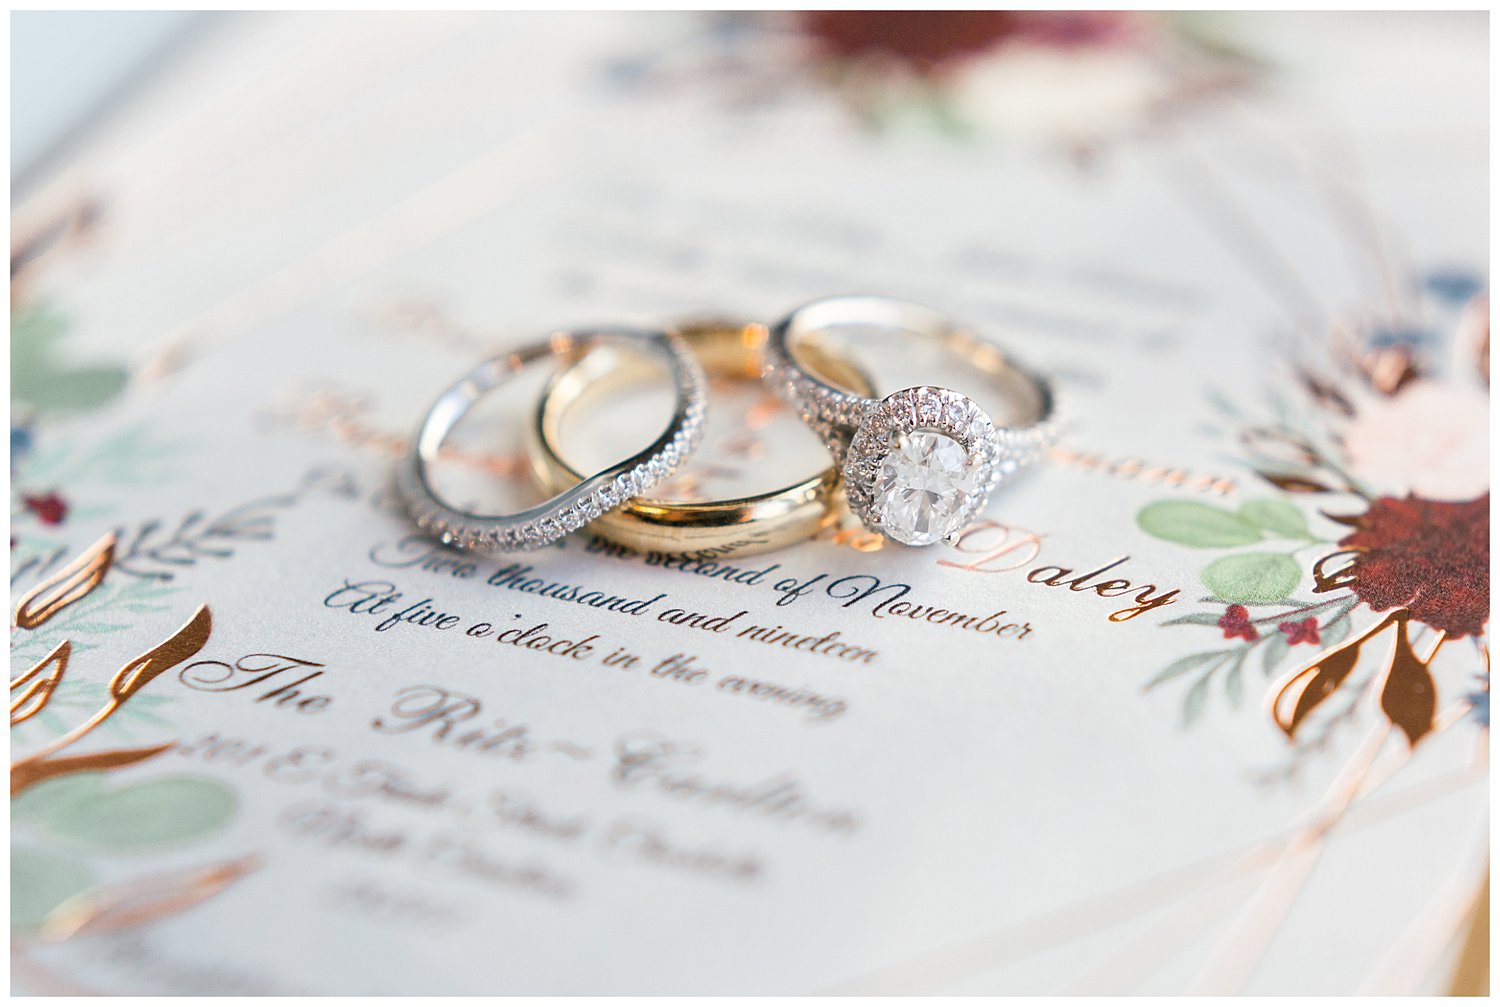 wedding ring photo on invitation suite